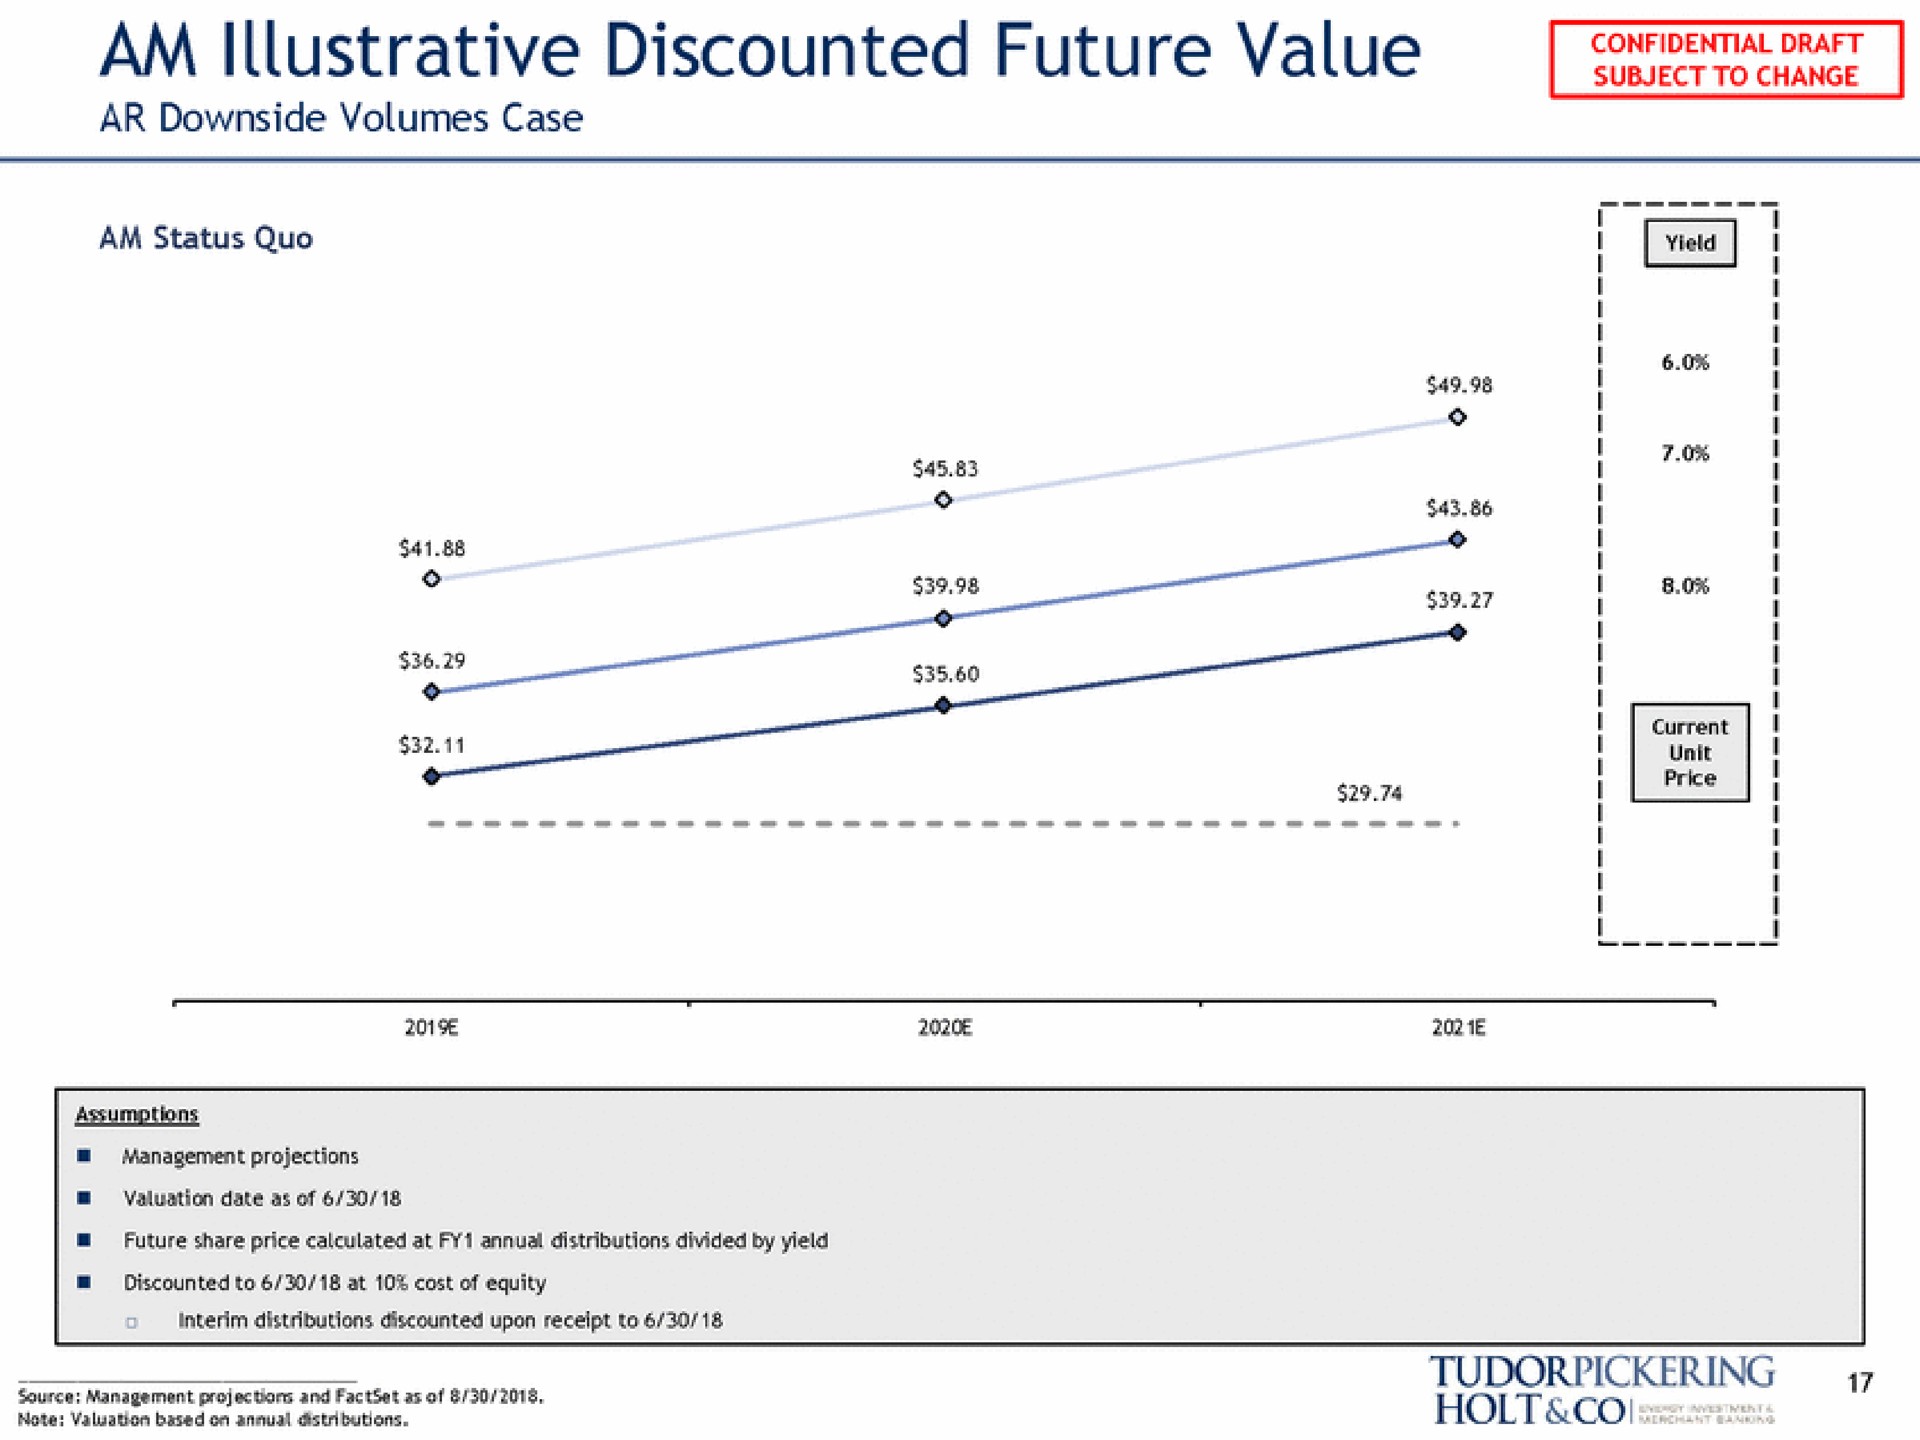 am illustrative discounted future value sea pain morn | Tudor, Pickering, Holt & Co